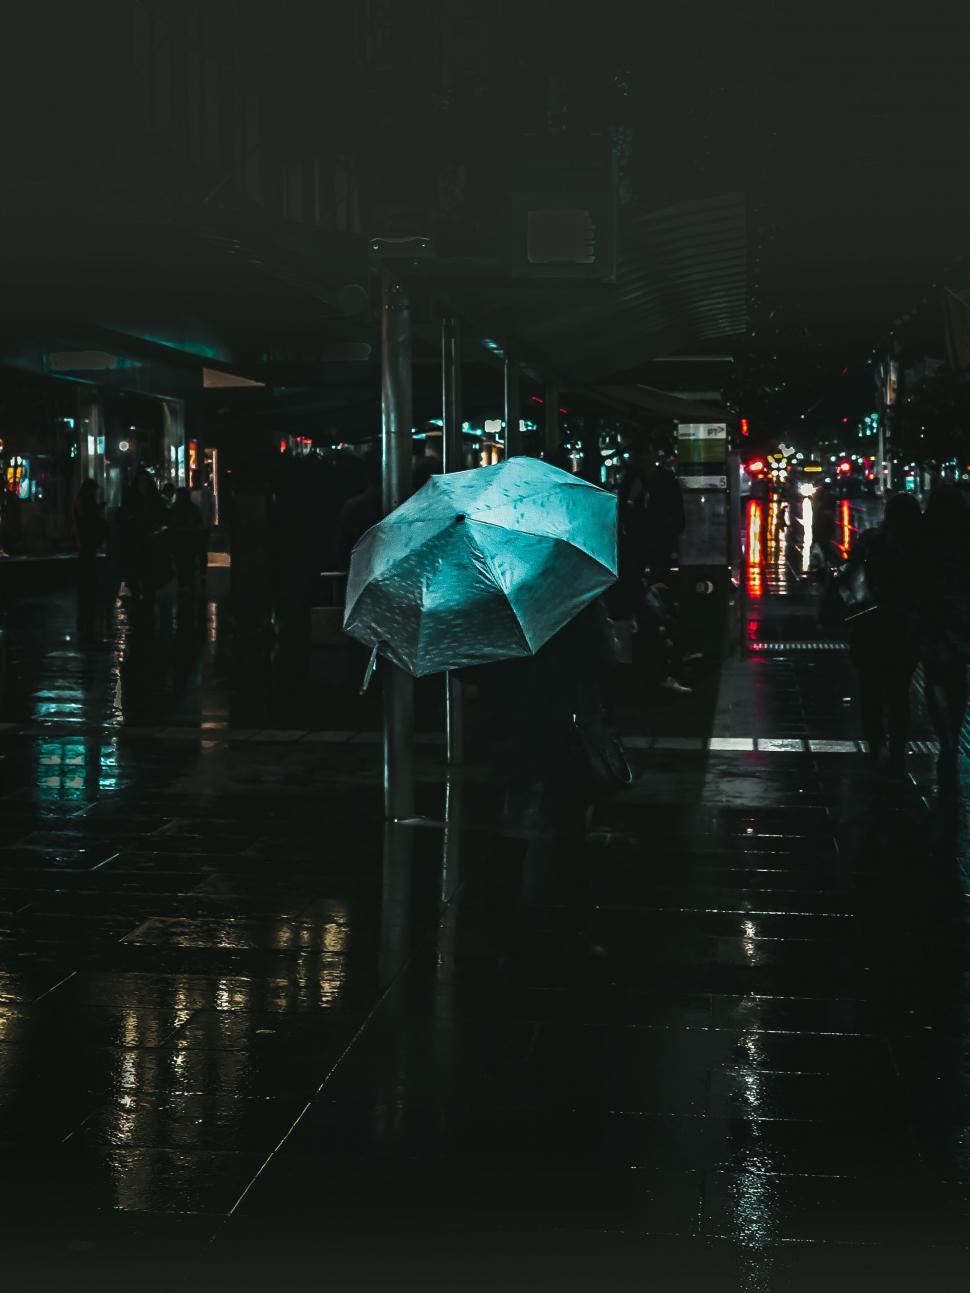 Free Image of Rainy street at night with umbrella 